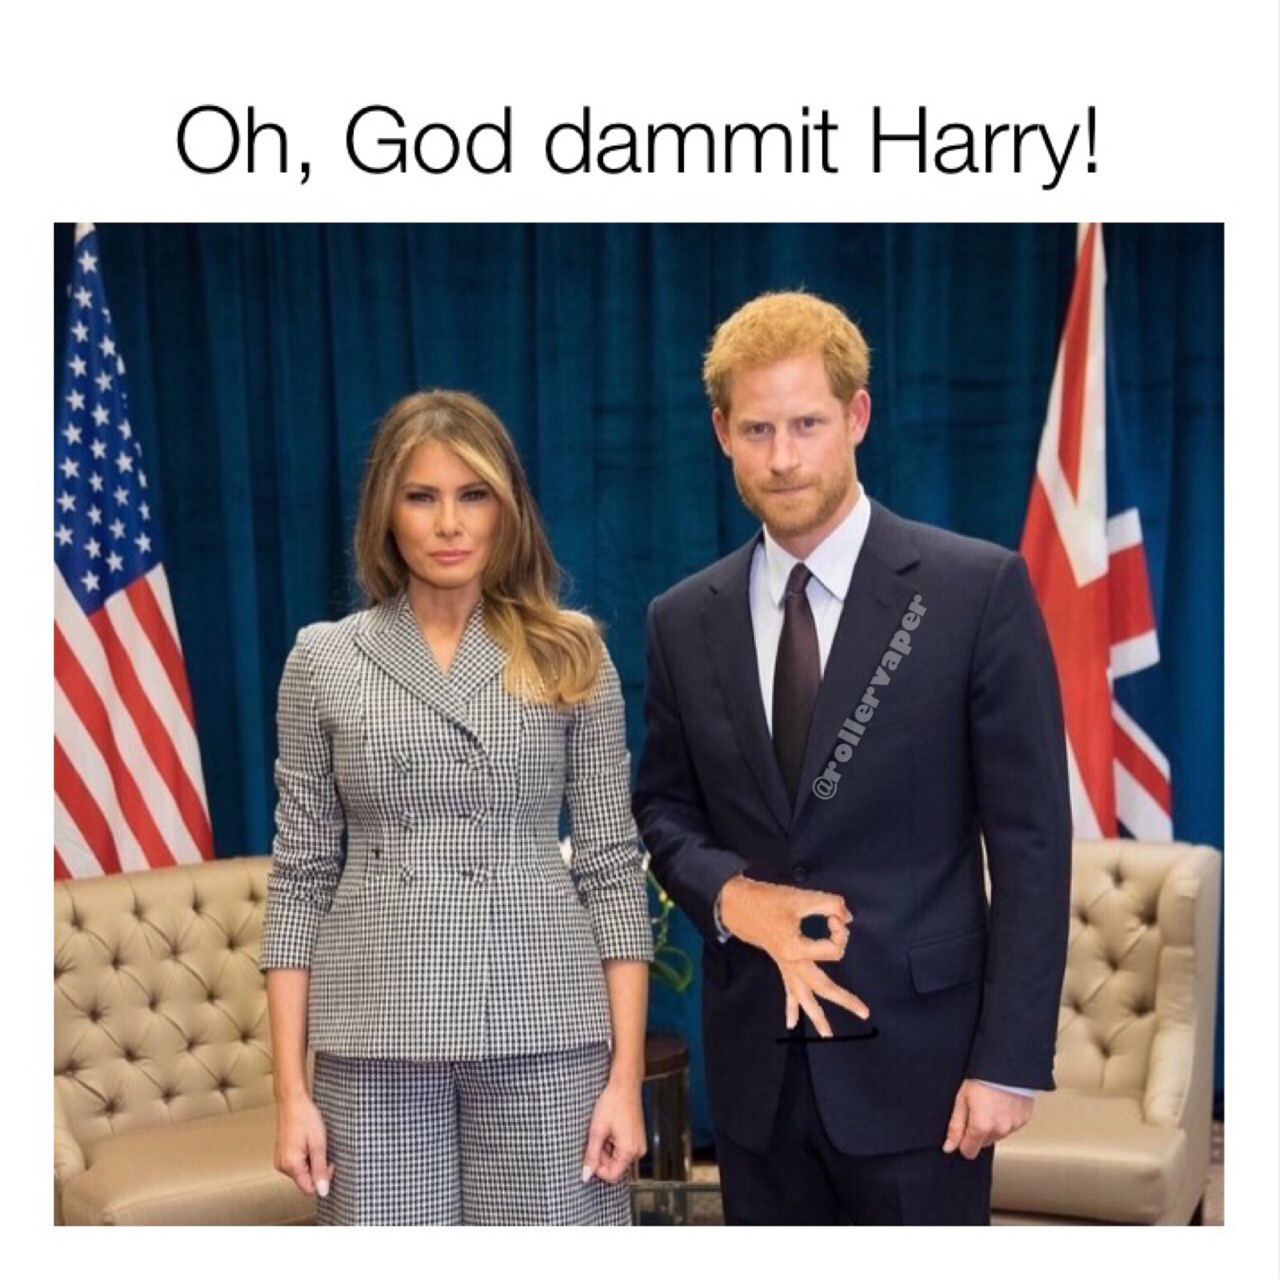 prince harry and melania trump - Oh, God dammit Harry!